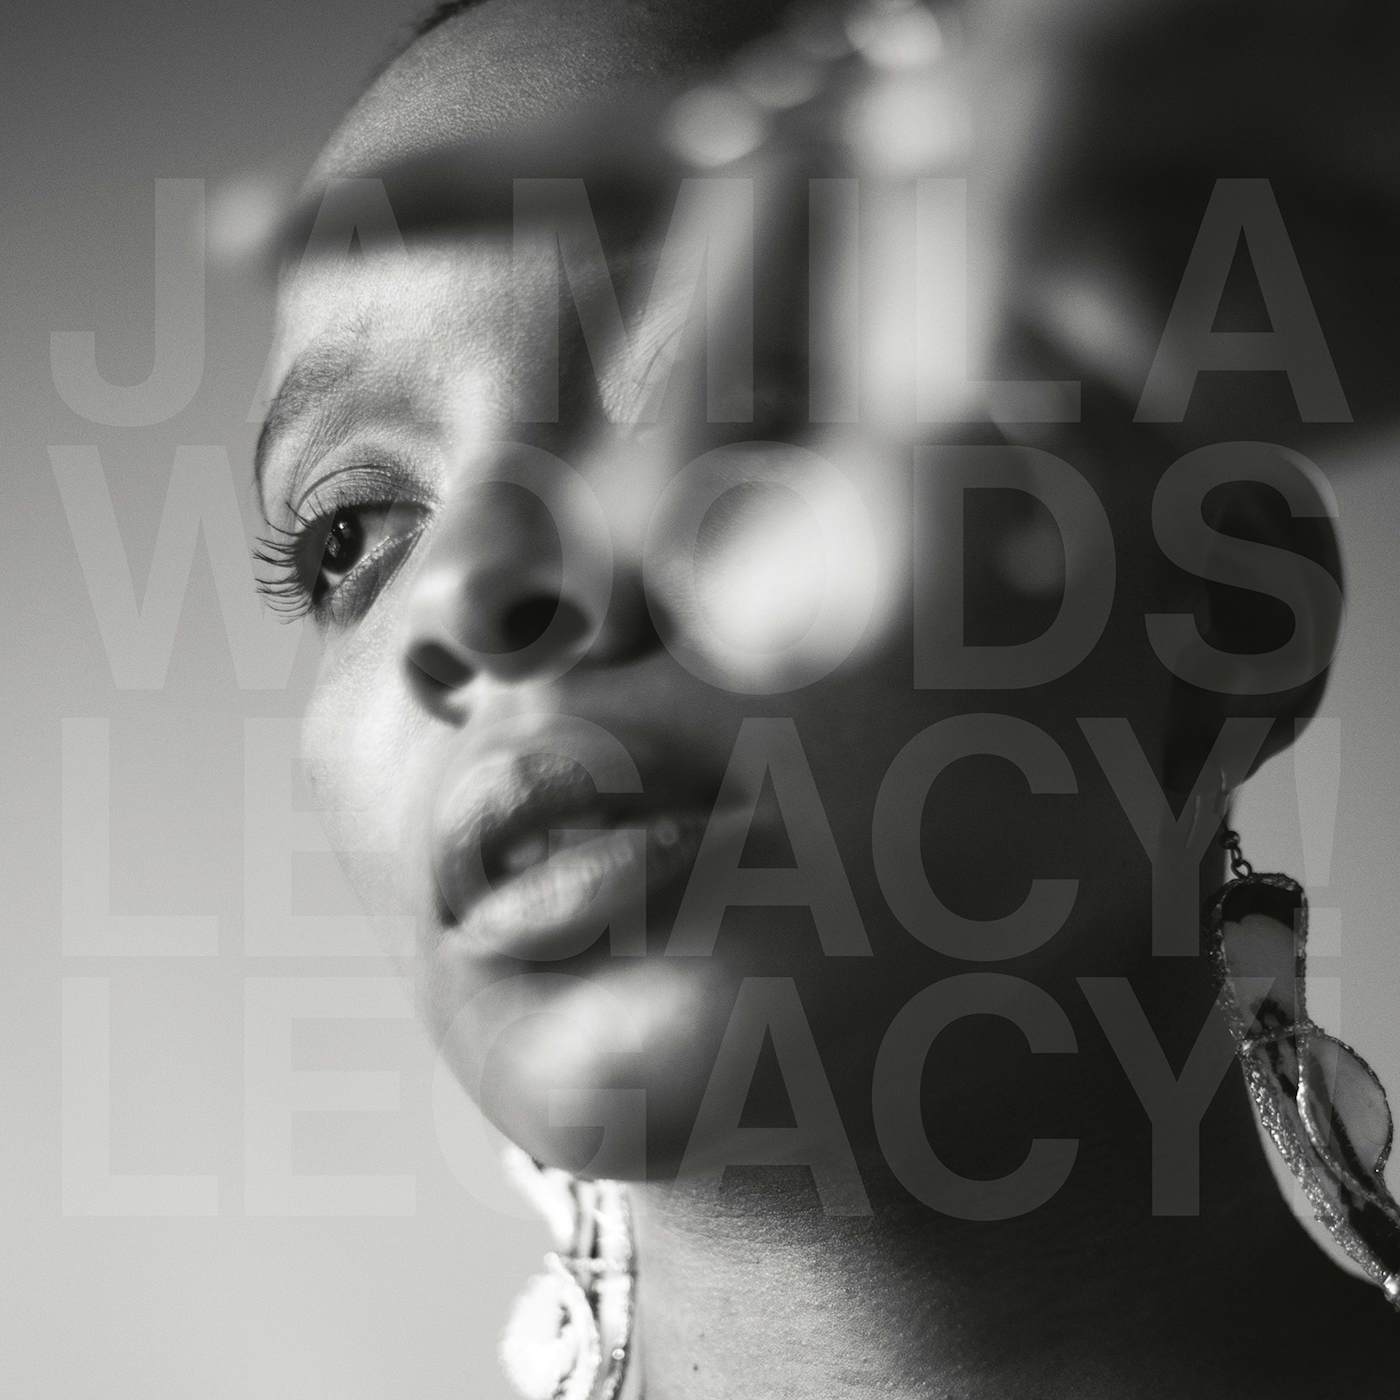 Jamila Woods Legacy! Legacy! Vinyl Record